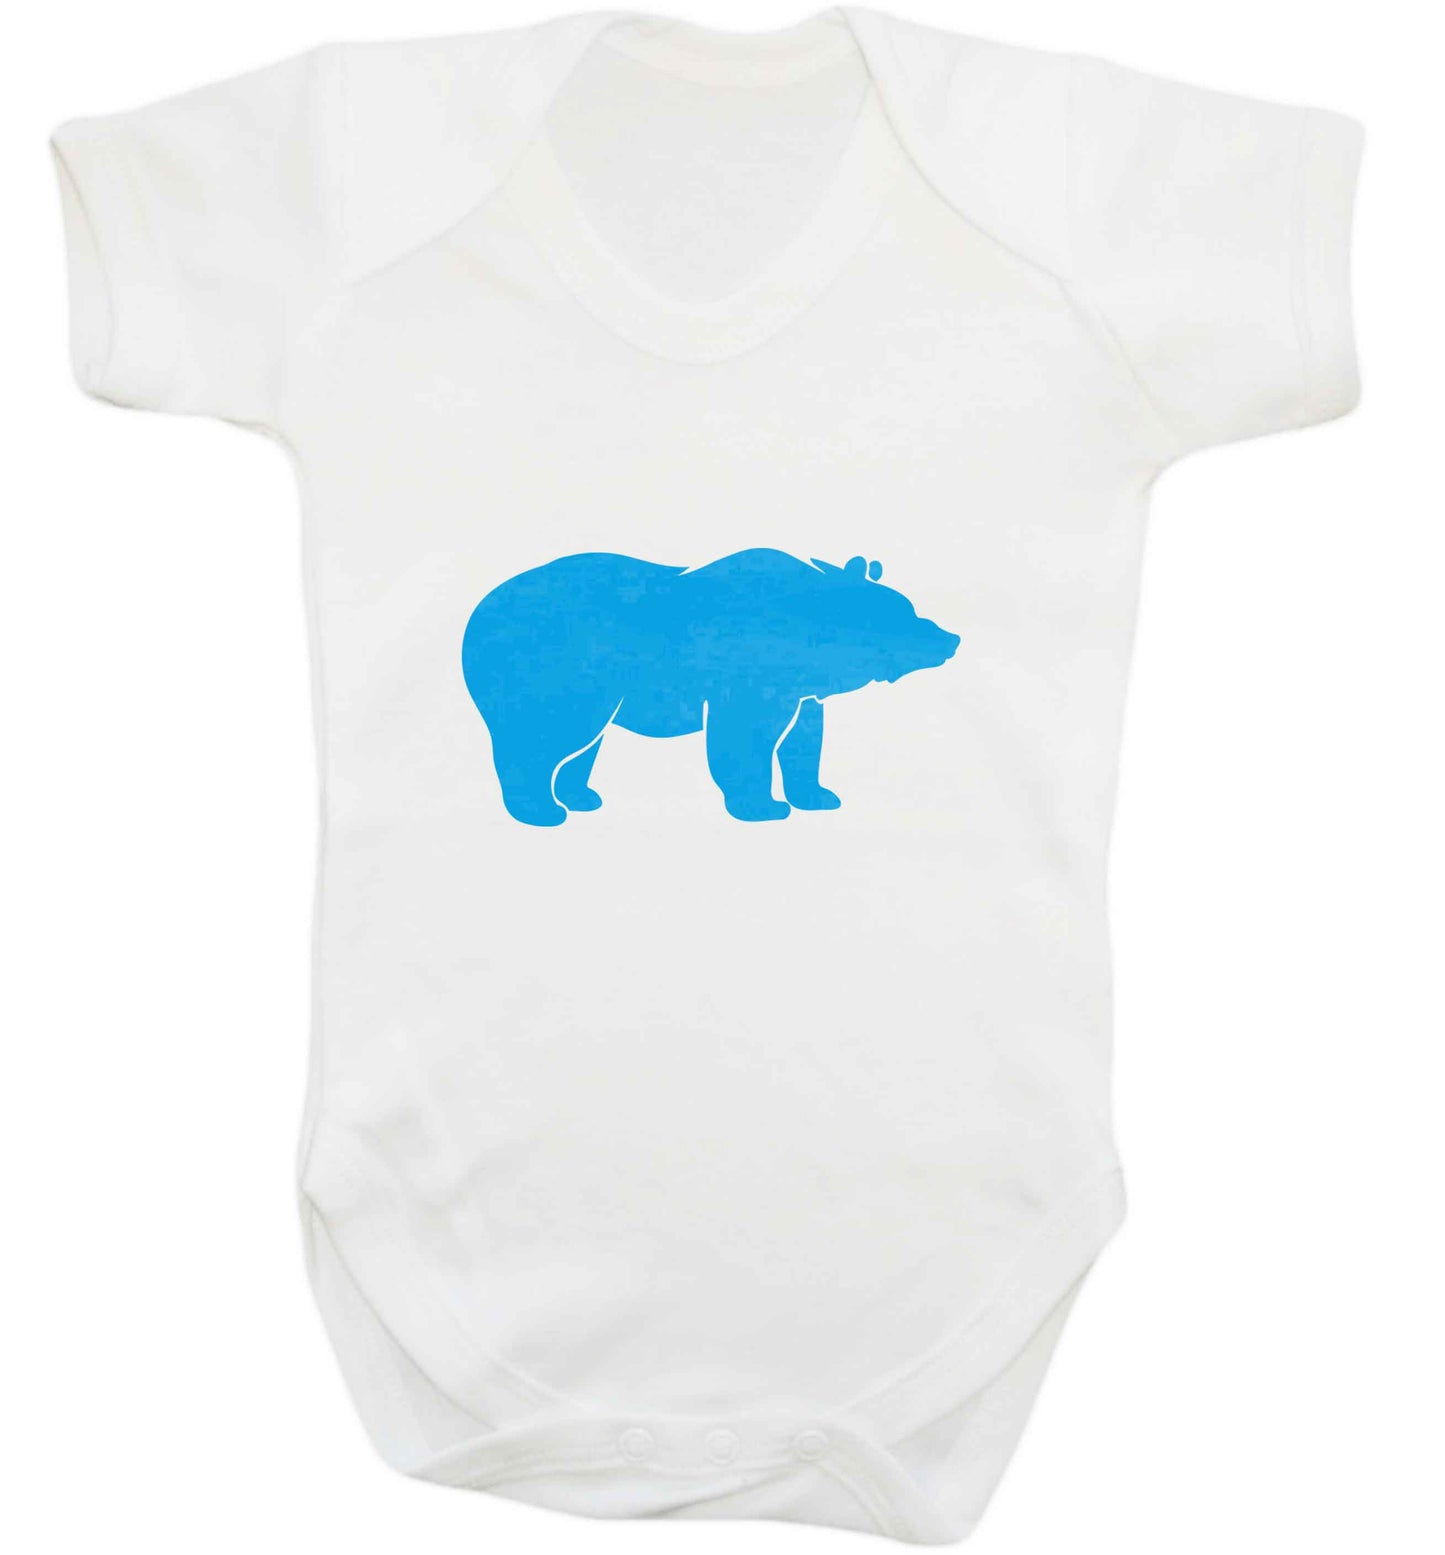 Blue bear baby vest white 18-24 months